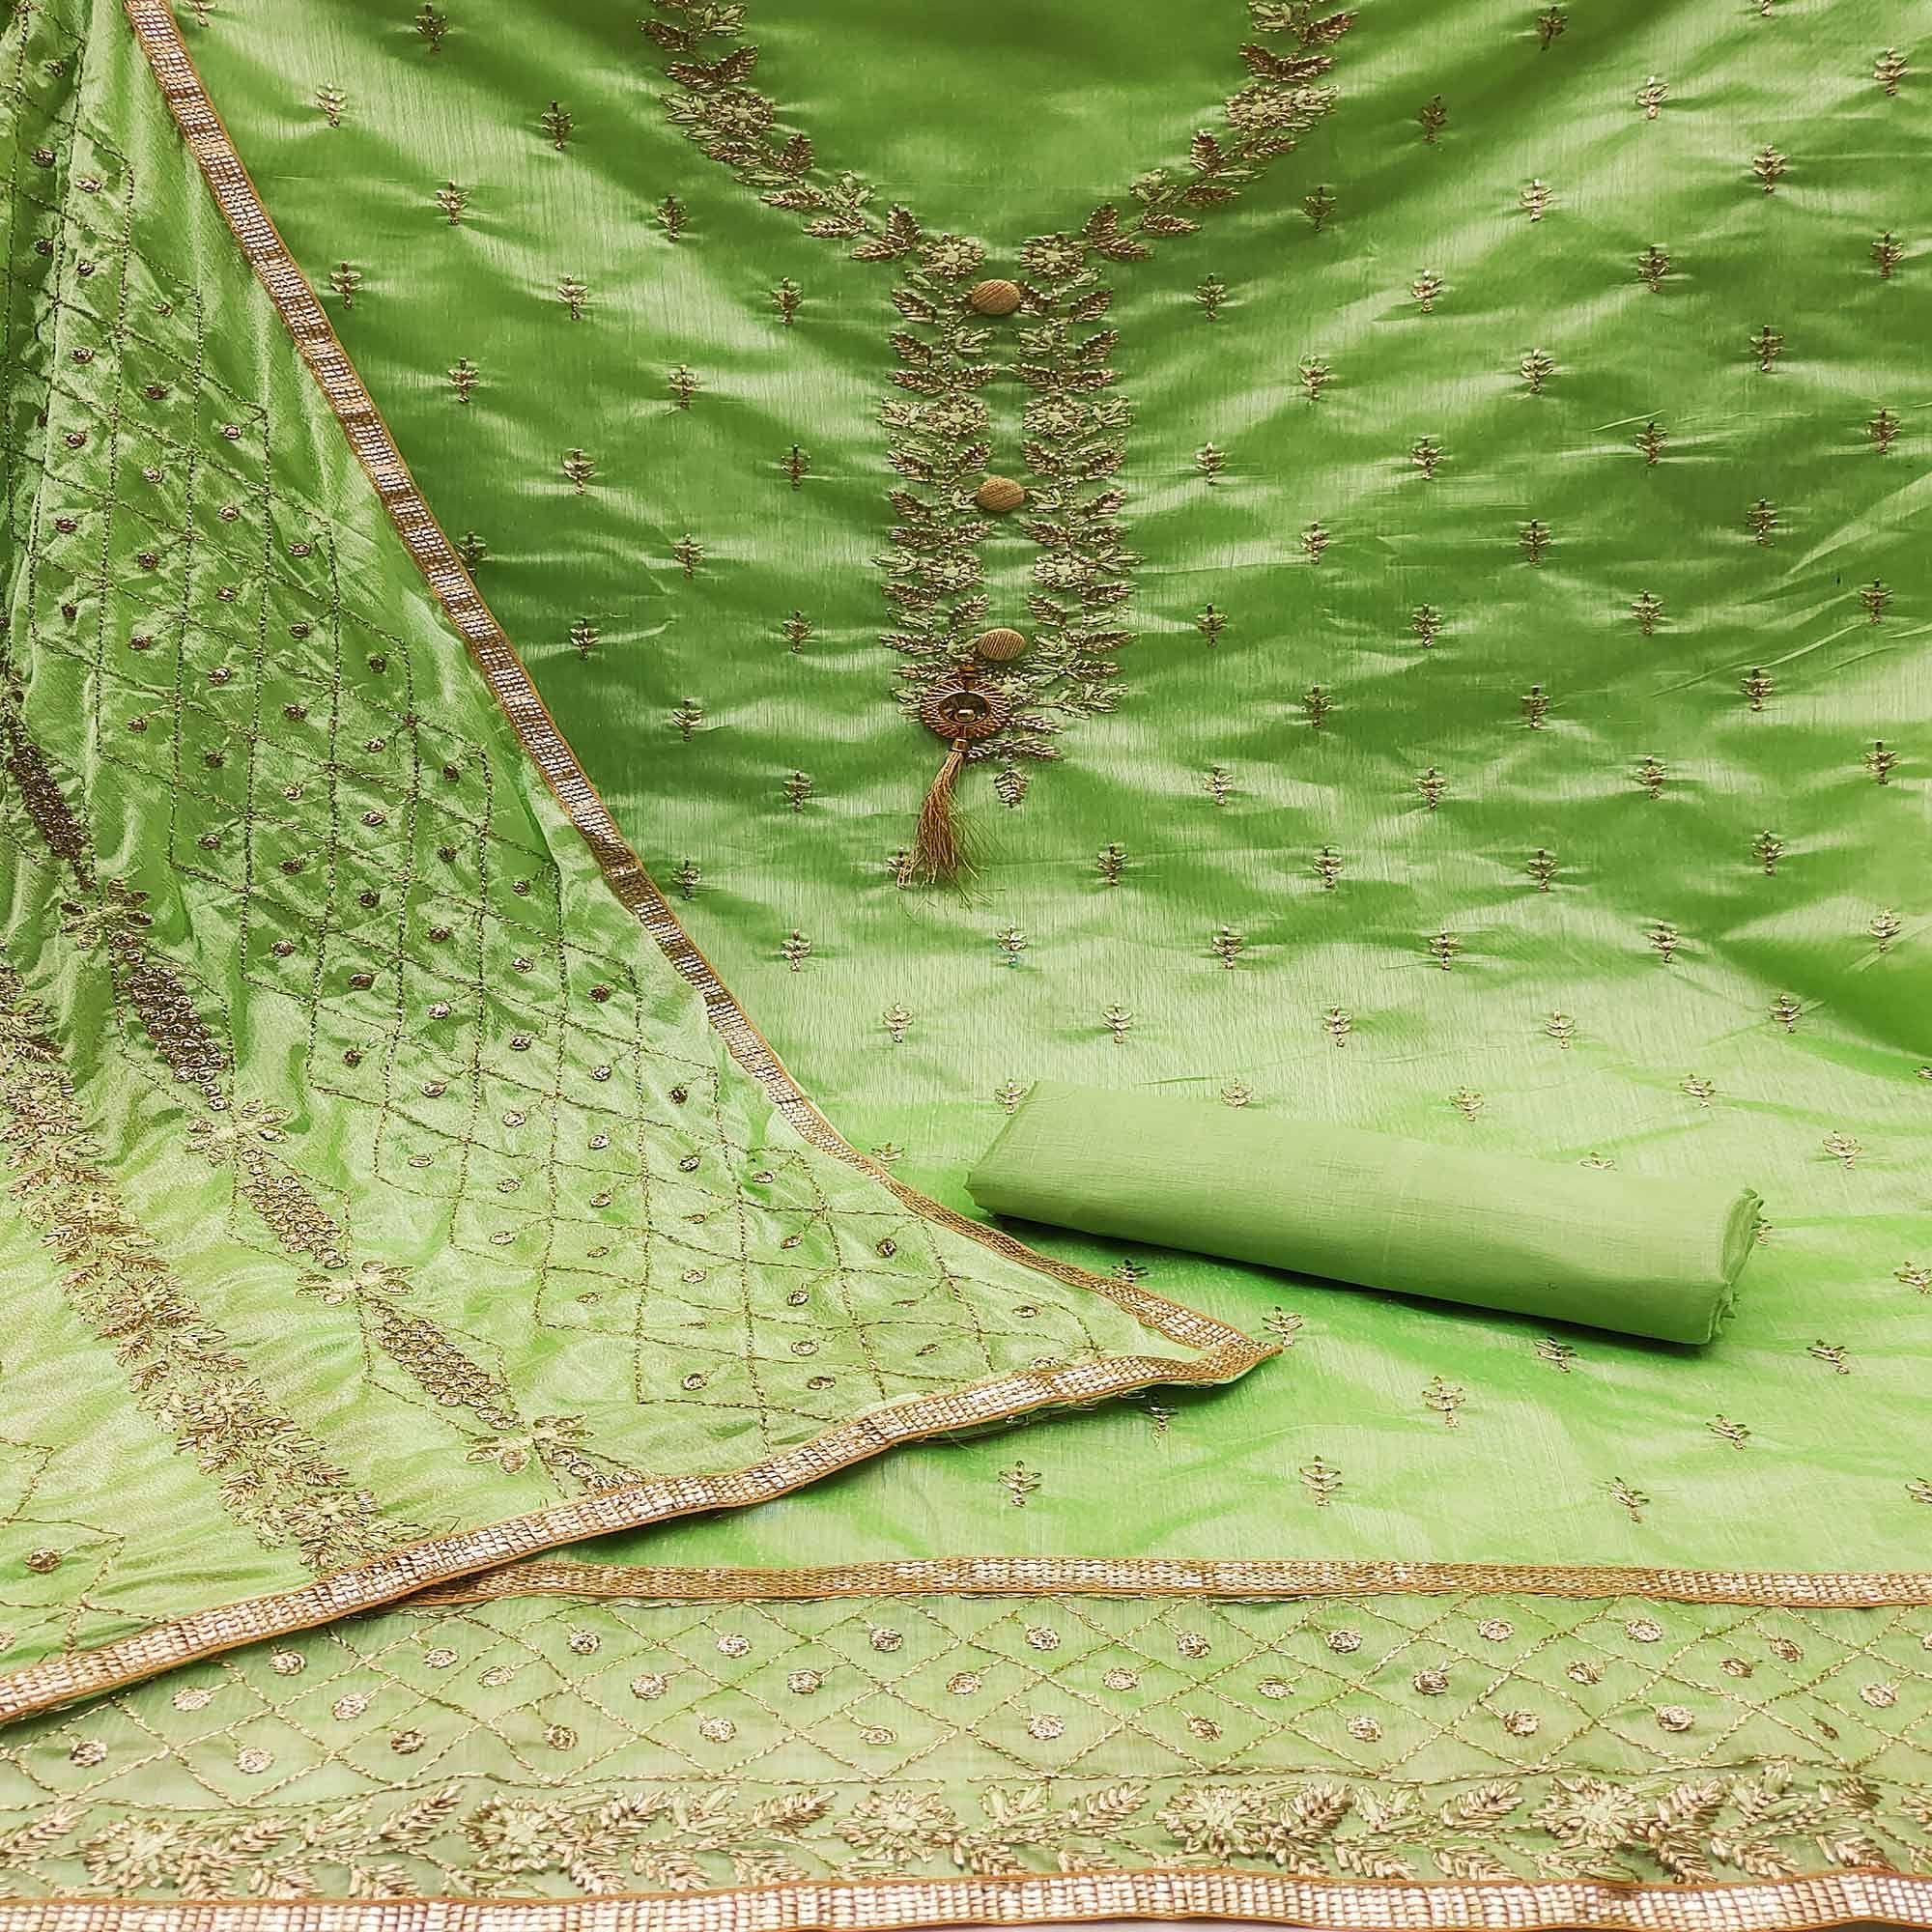 Green Festive Wear Embroidered Chanderi Dress Material - Peachmode